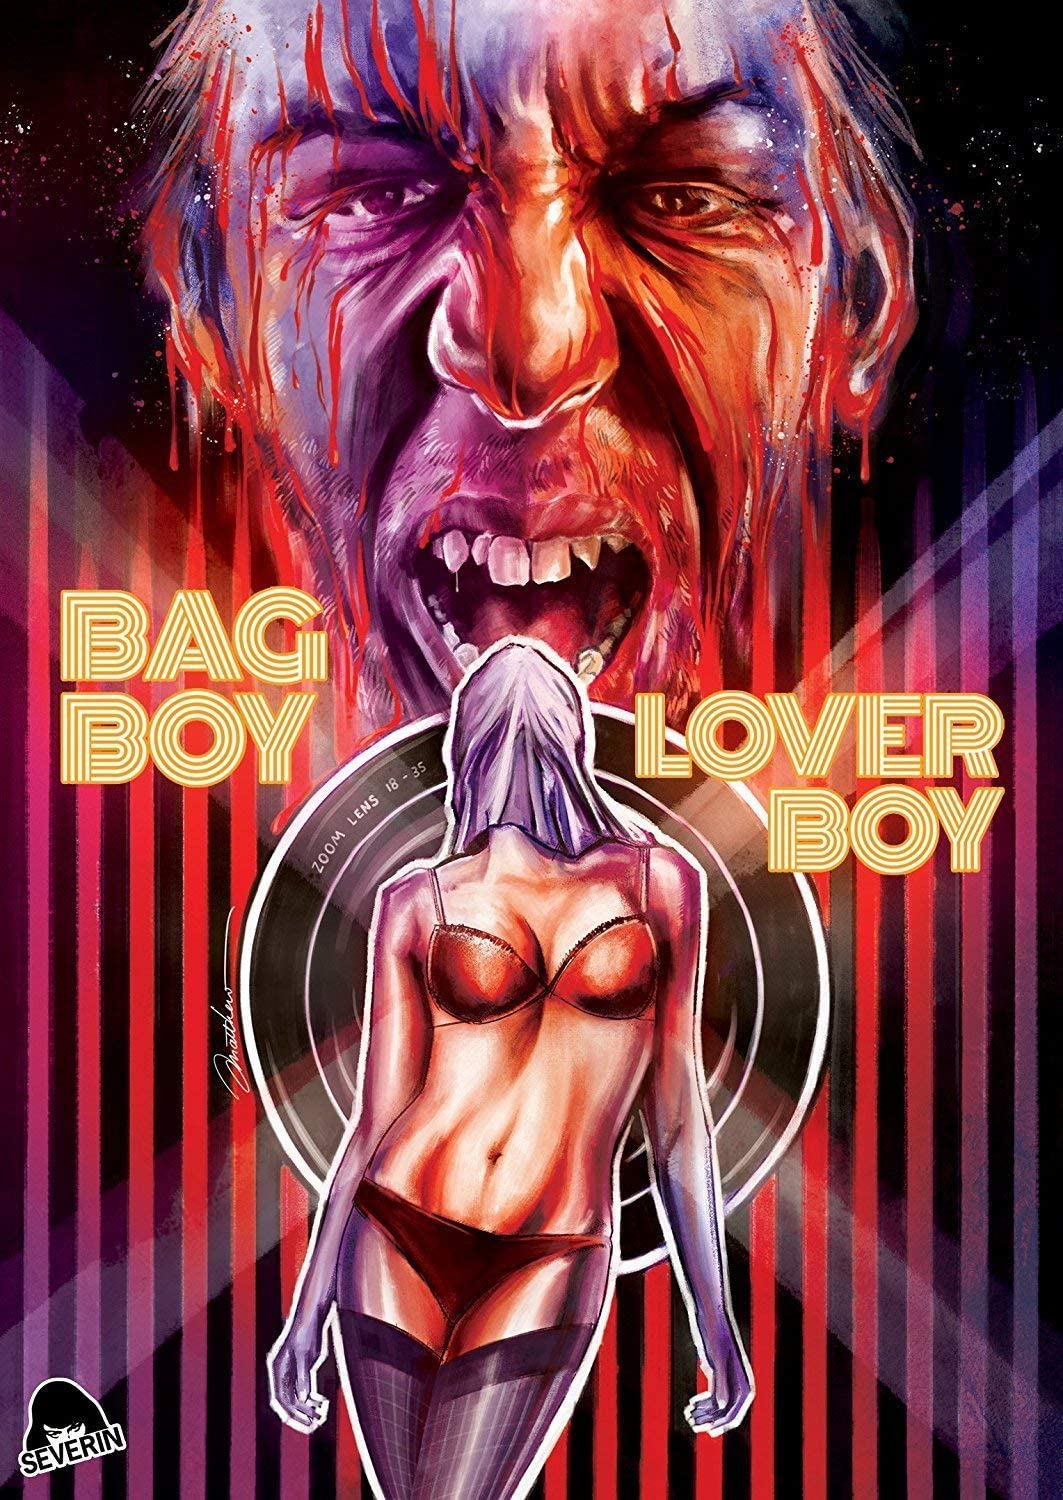 Bag Boy Lover Boy [2017] [Horror/Comedy] [DVD]